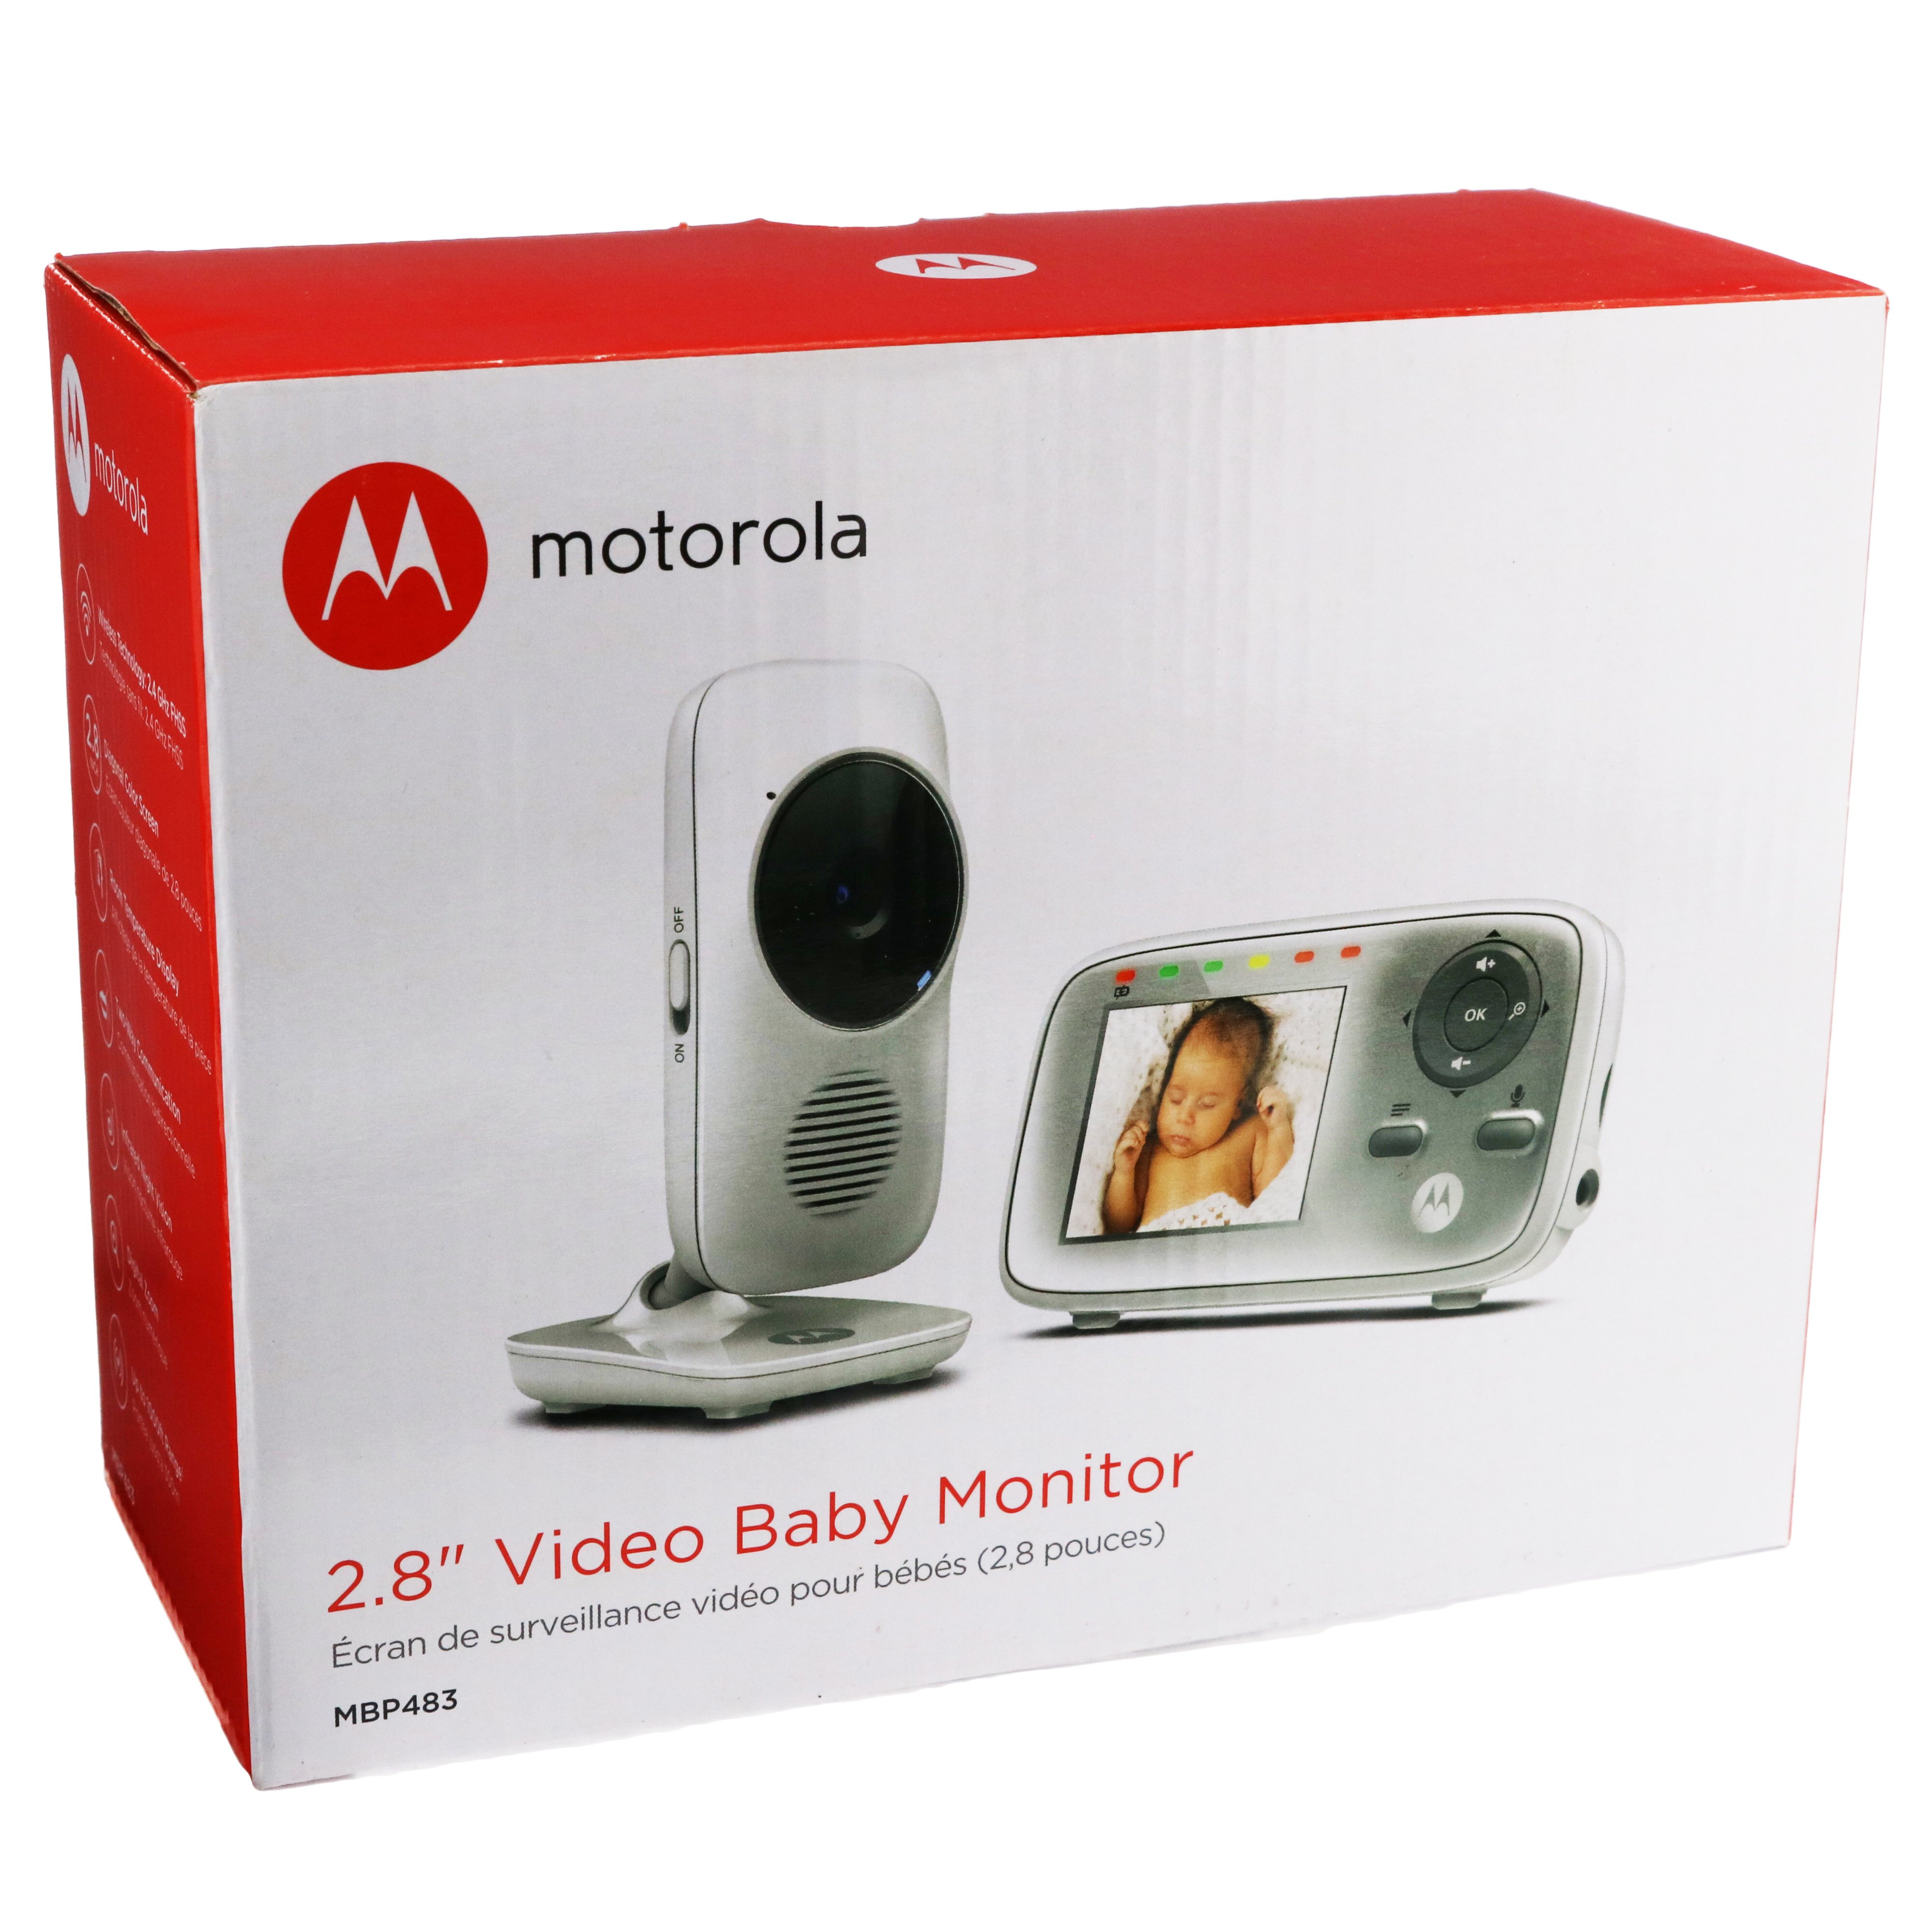 motorola baby monitor no video